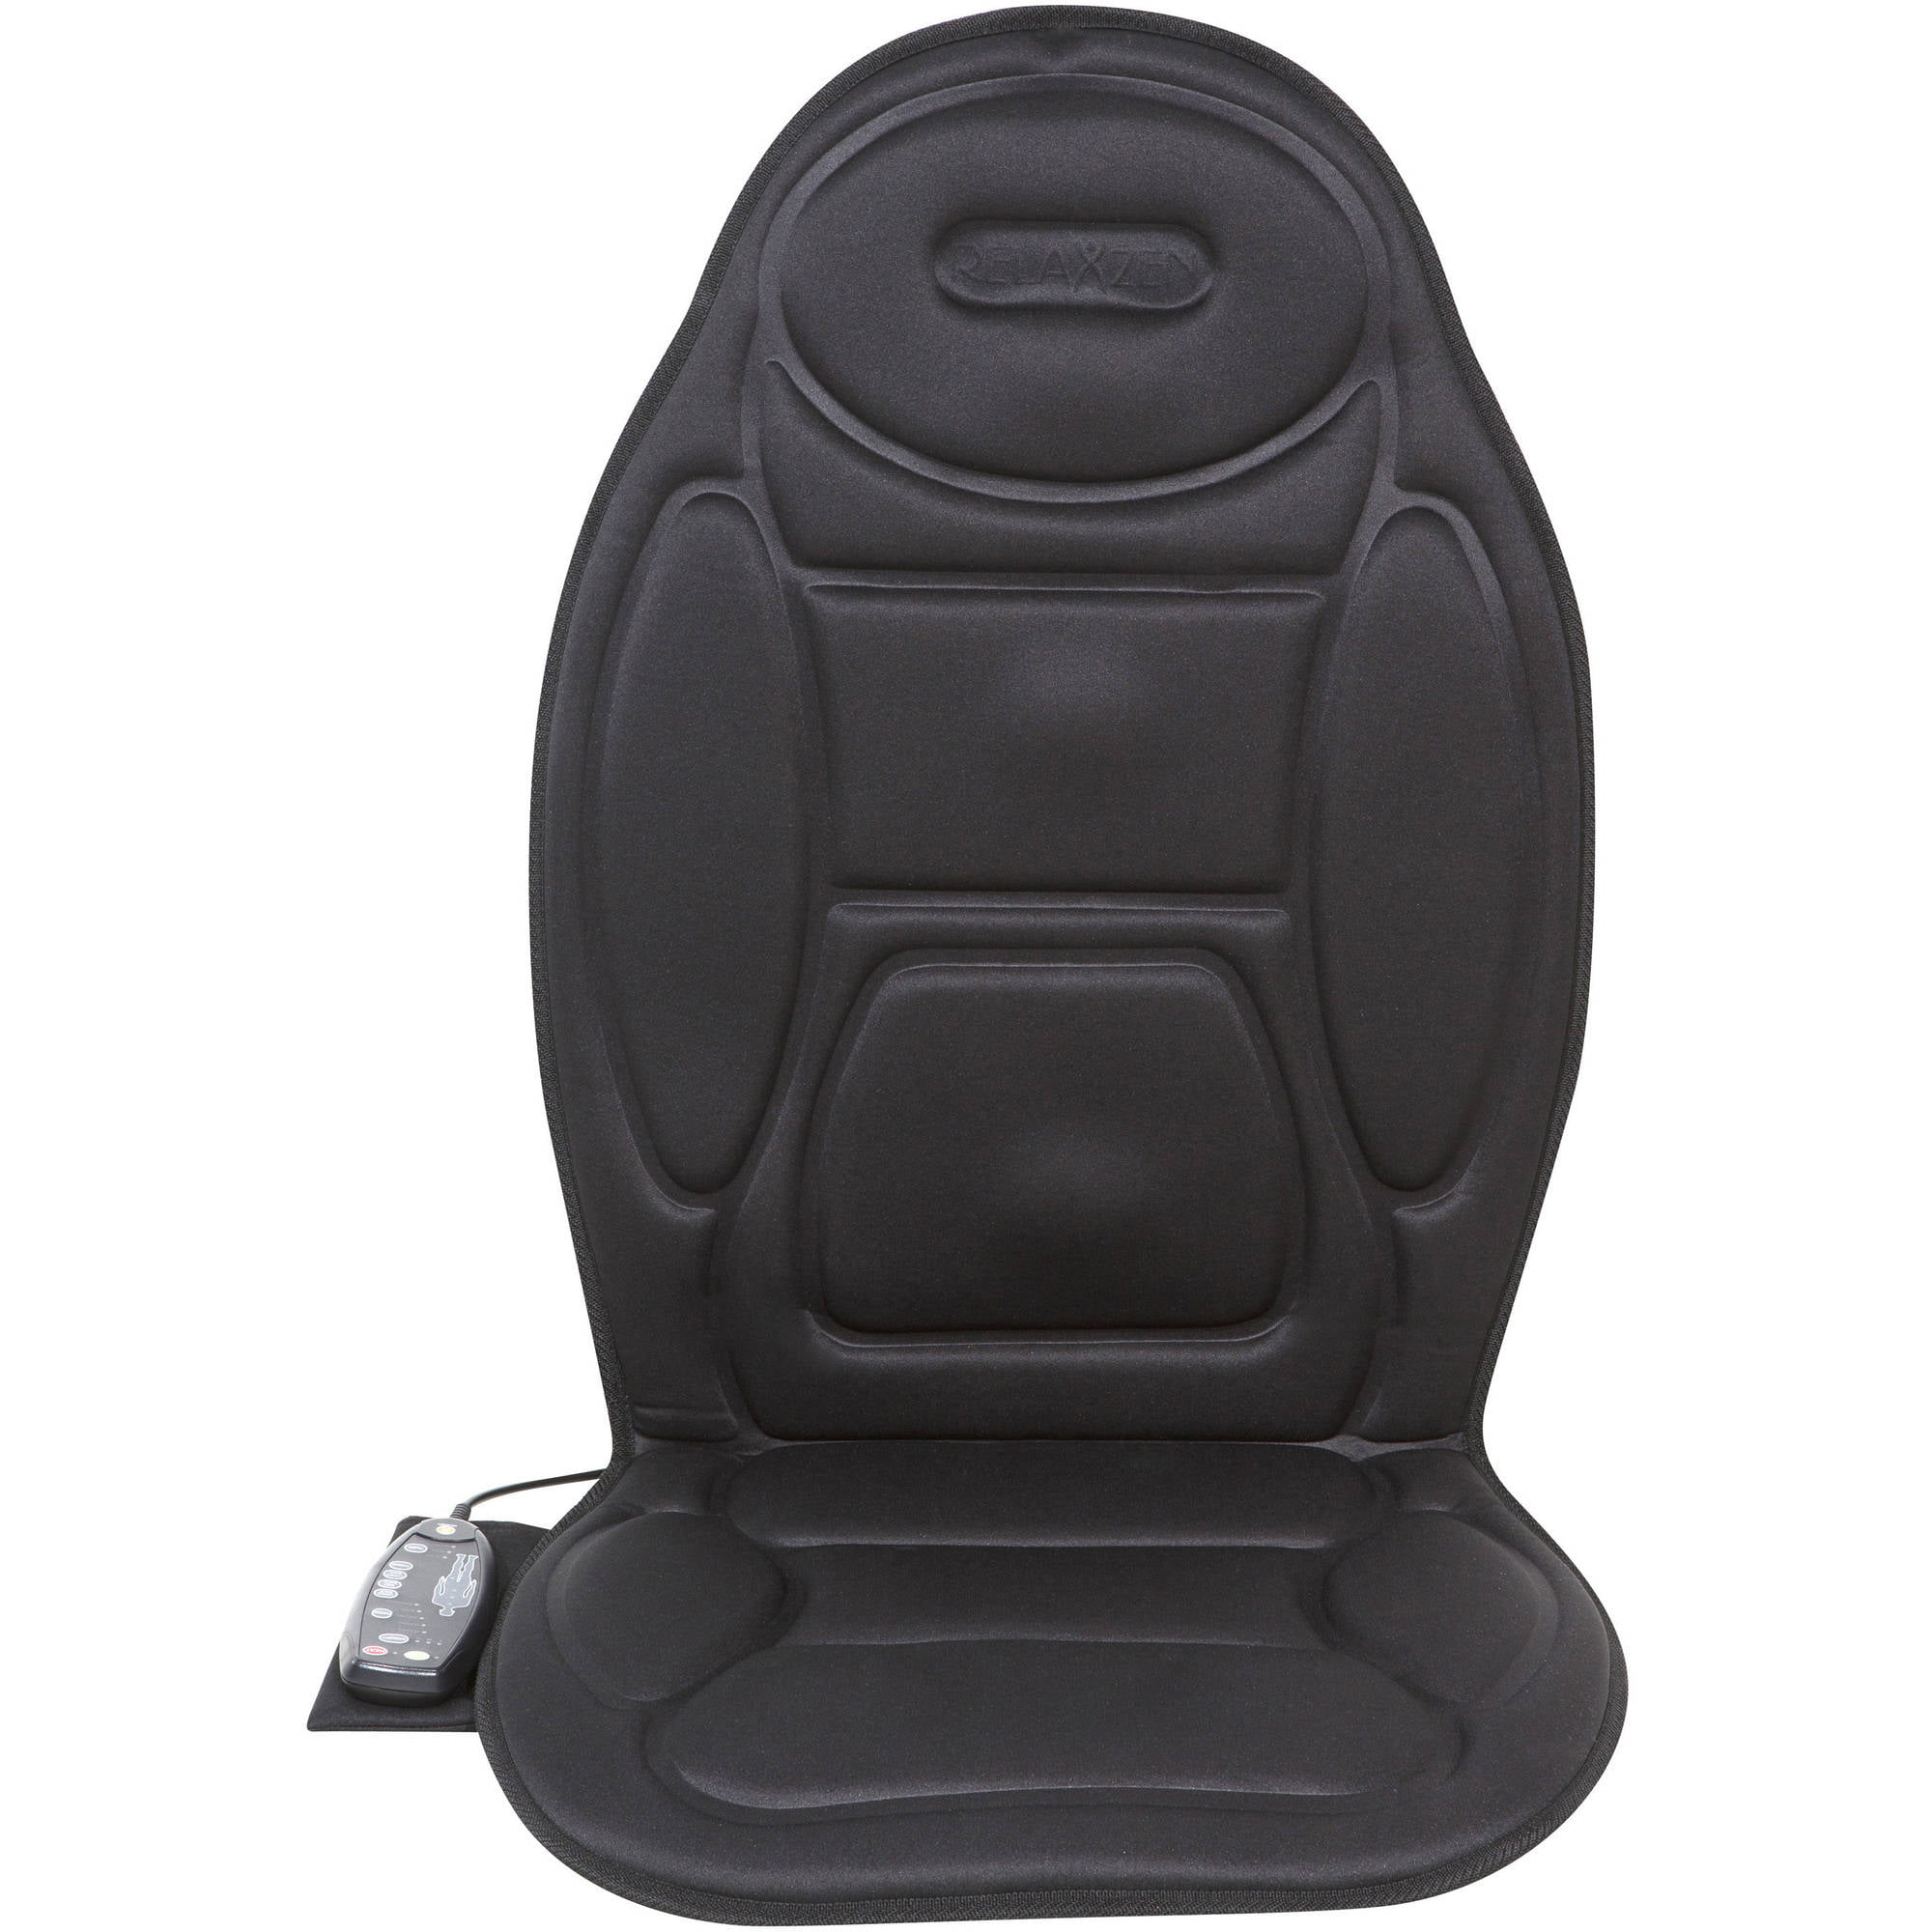 Relaxzen 60-2926XP Massage Seat Cushion, Black 